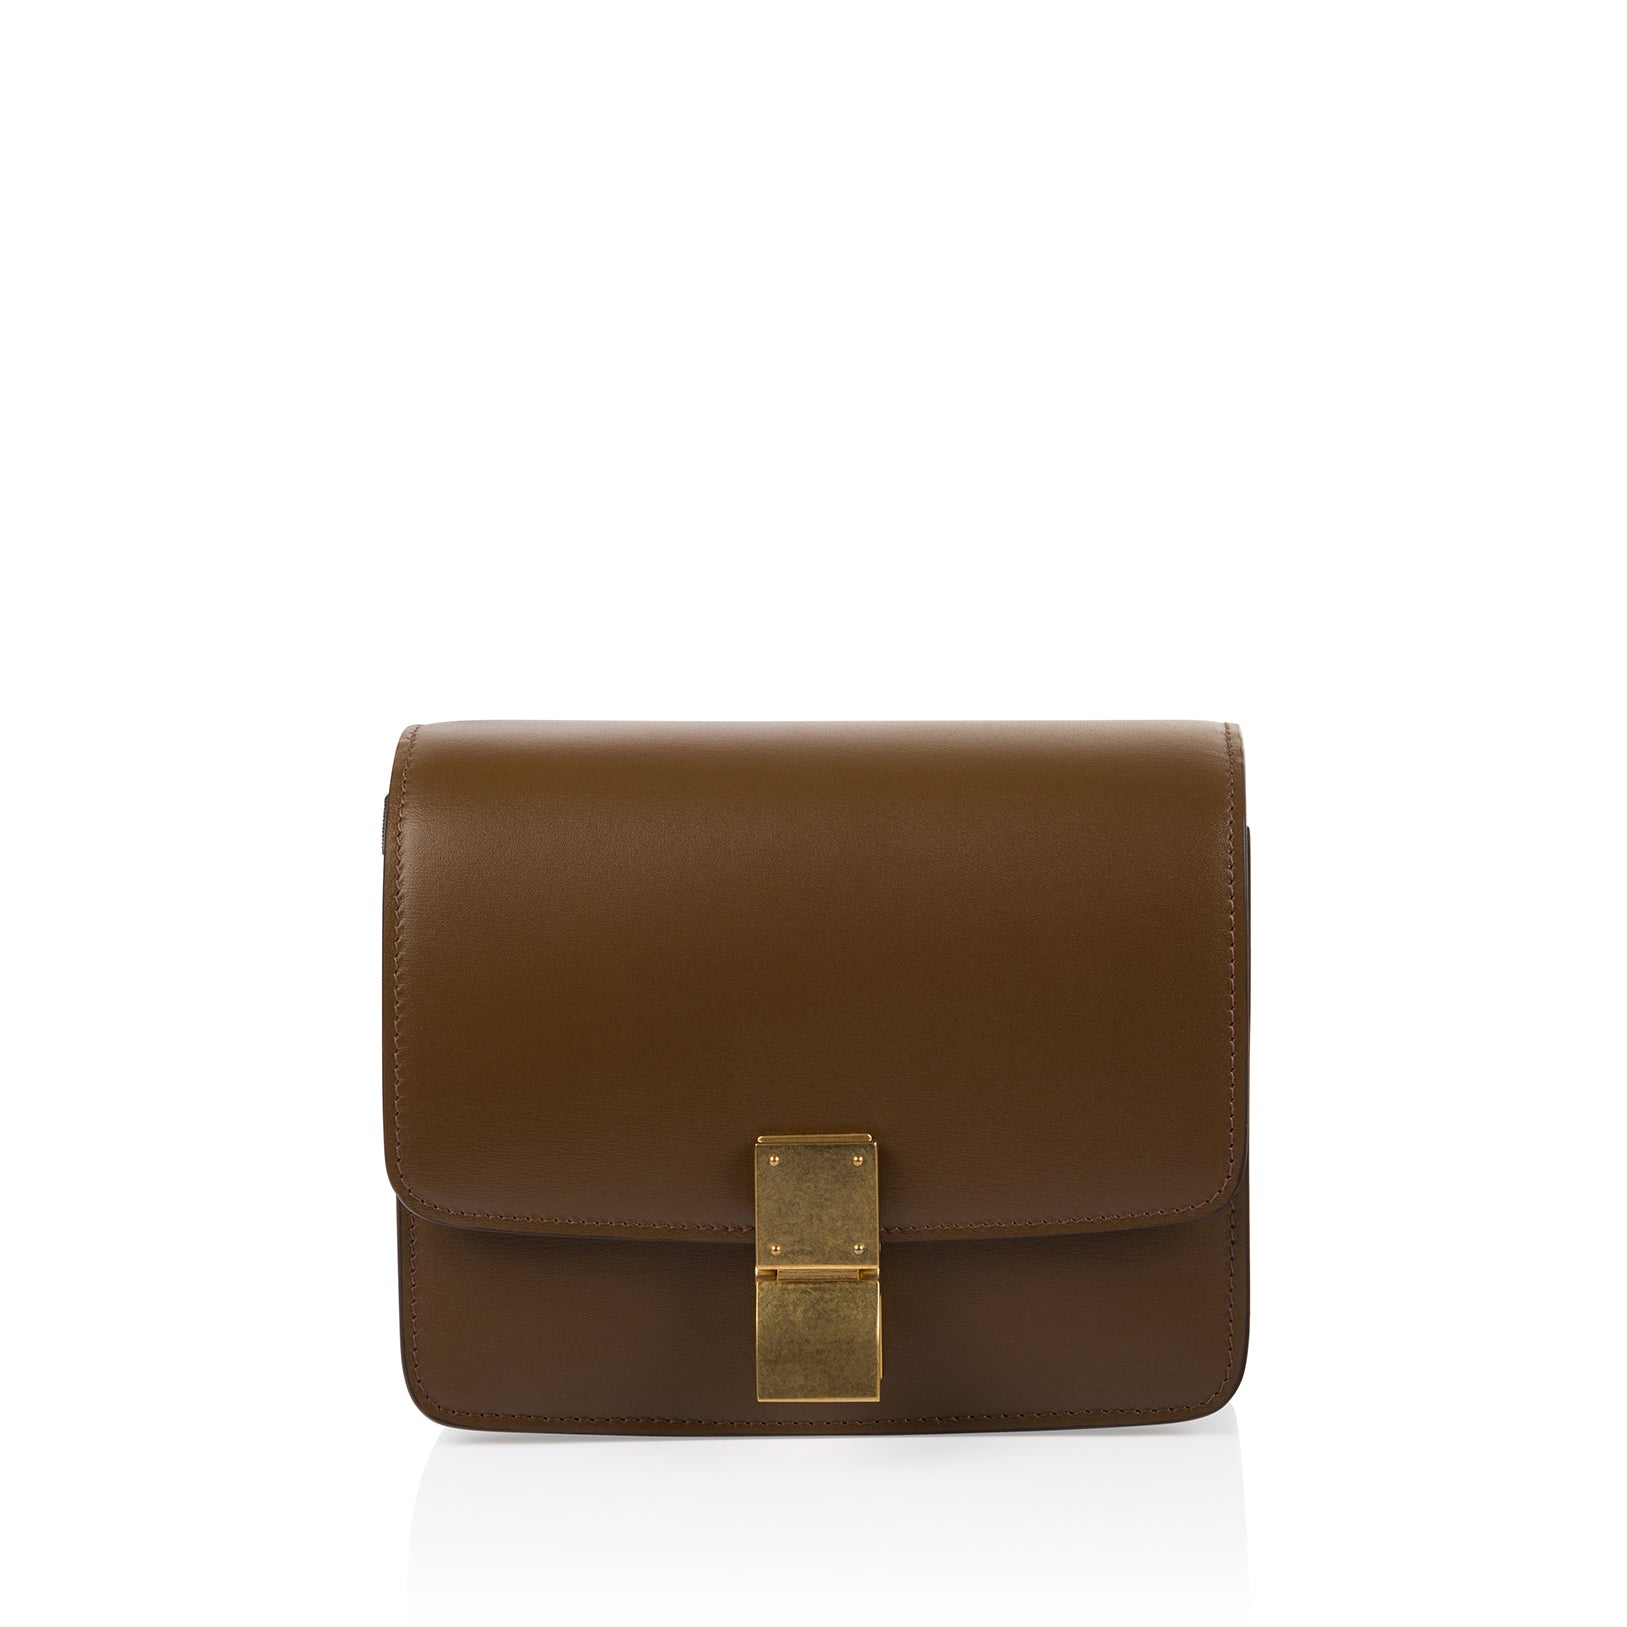 Céline - Small Classic Bag - Box bag - Brand New